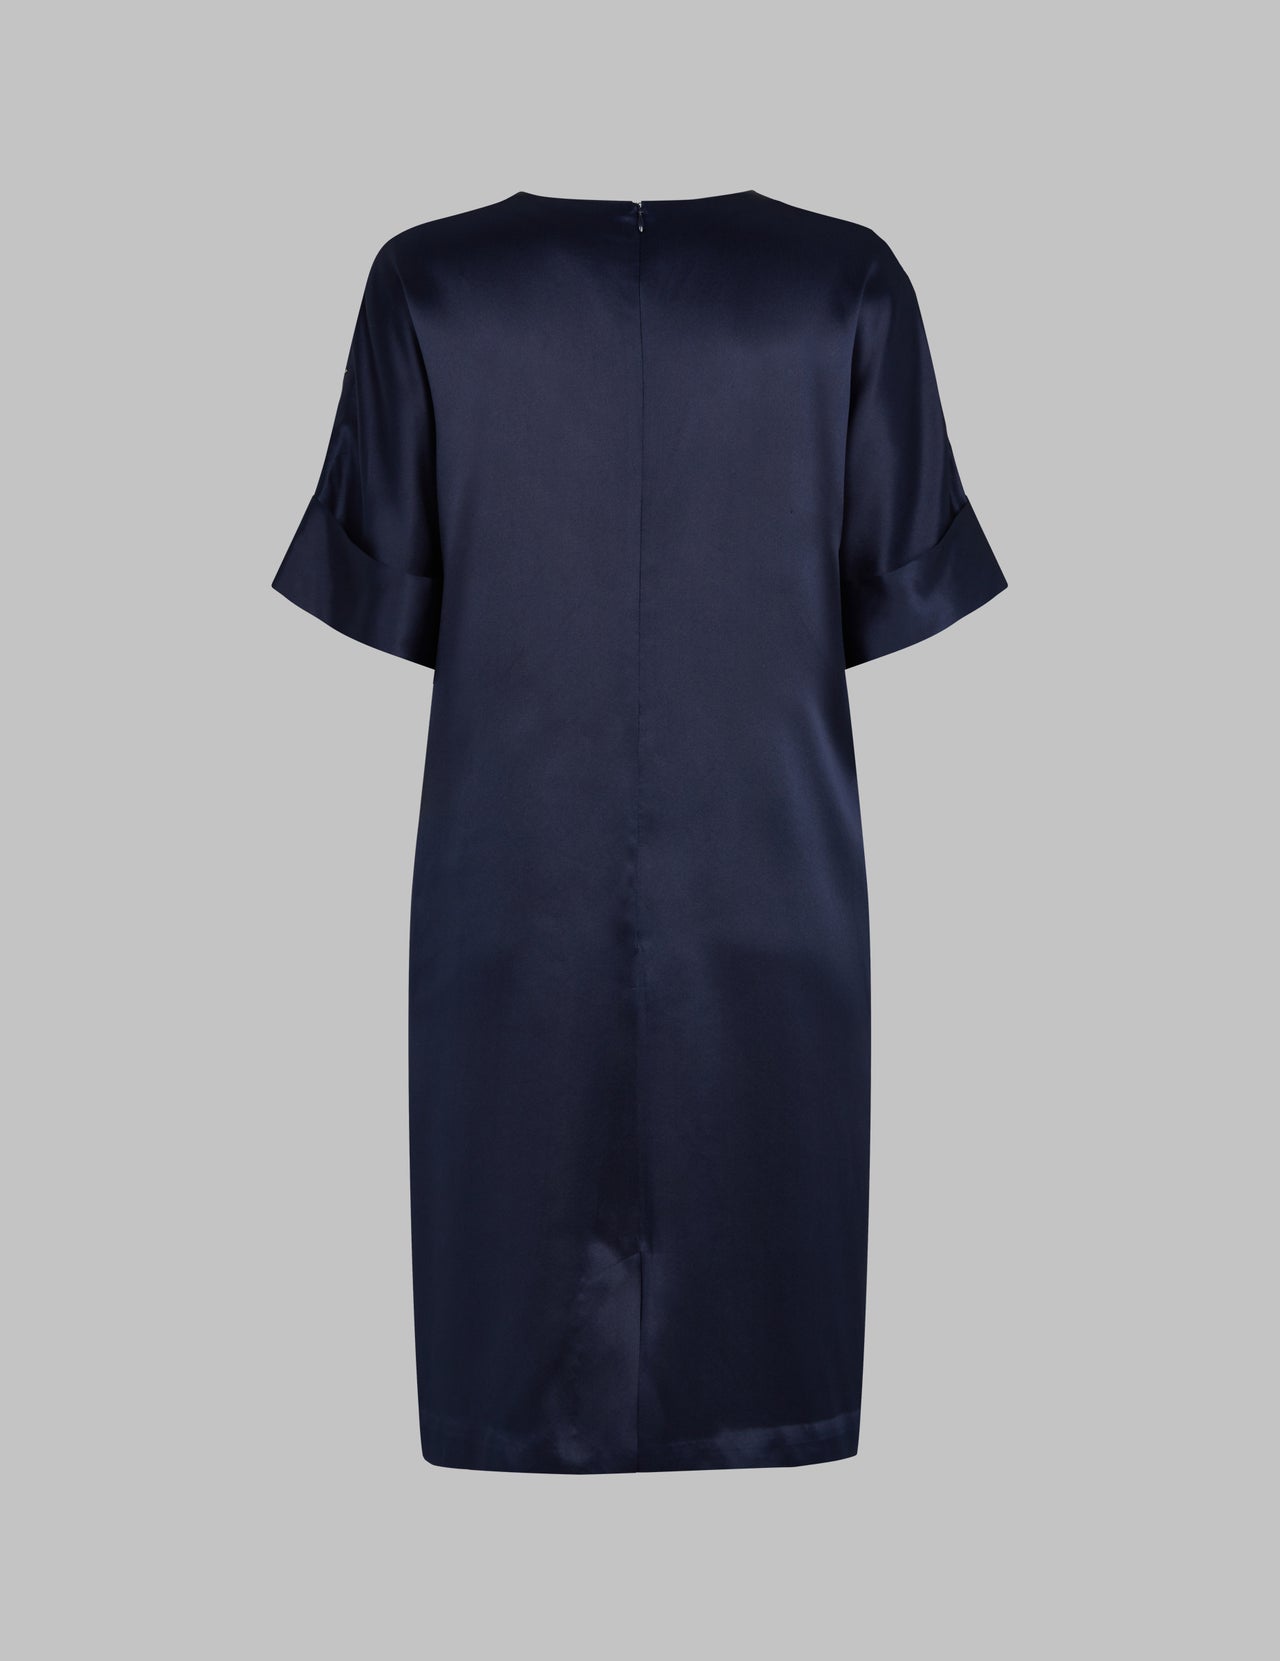  Navy Silk Satin Embellished Dress 